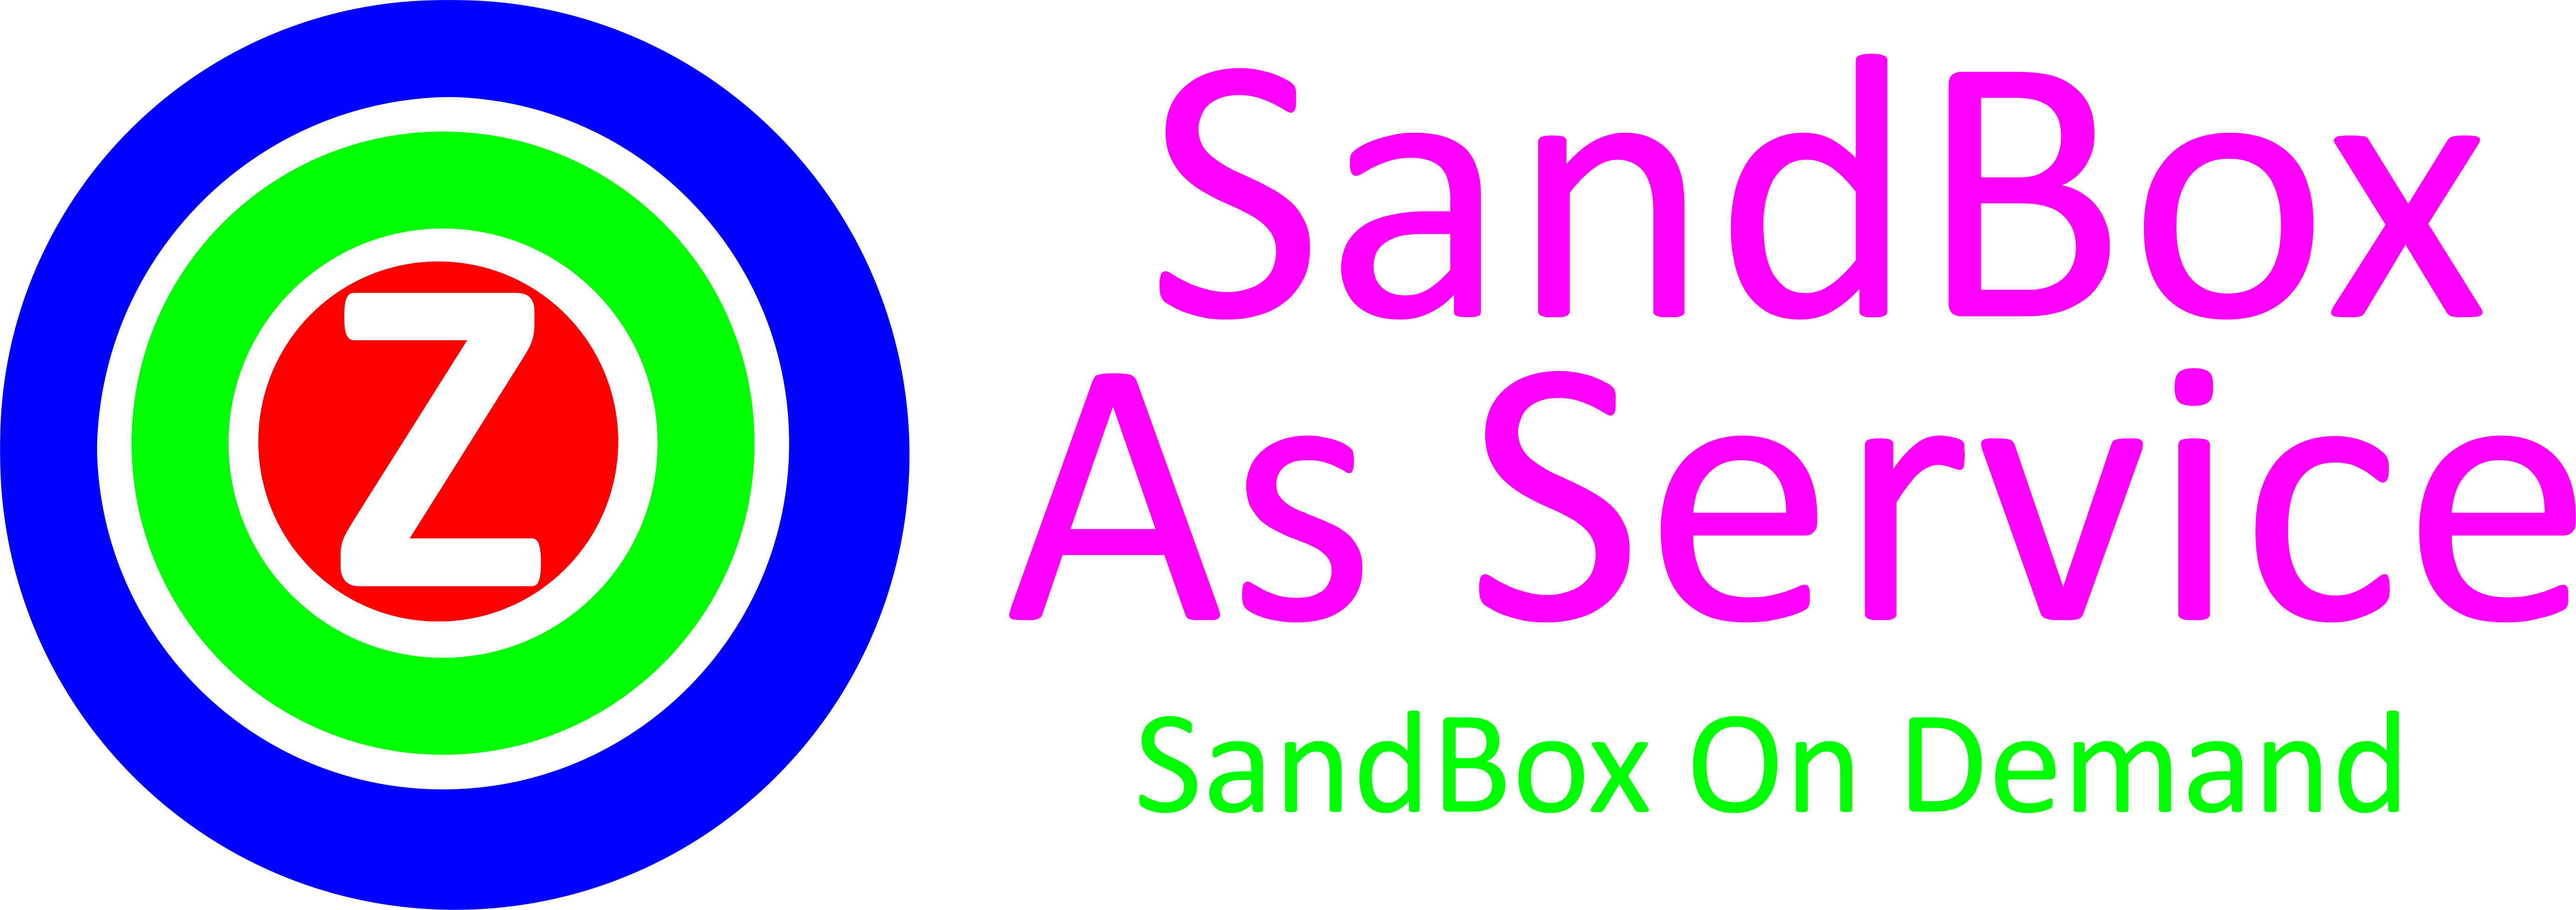 SandBox As Service